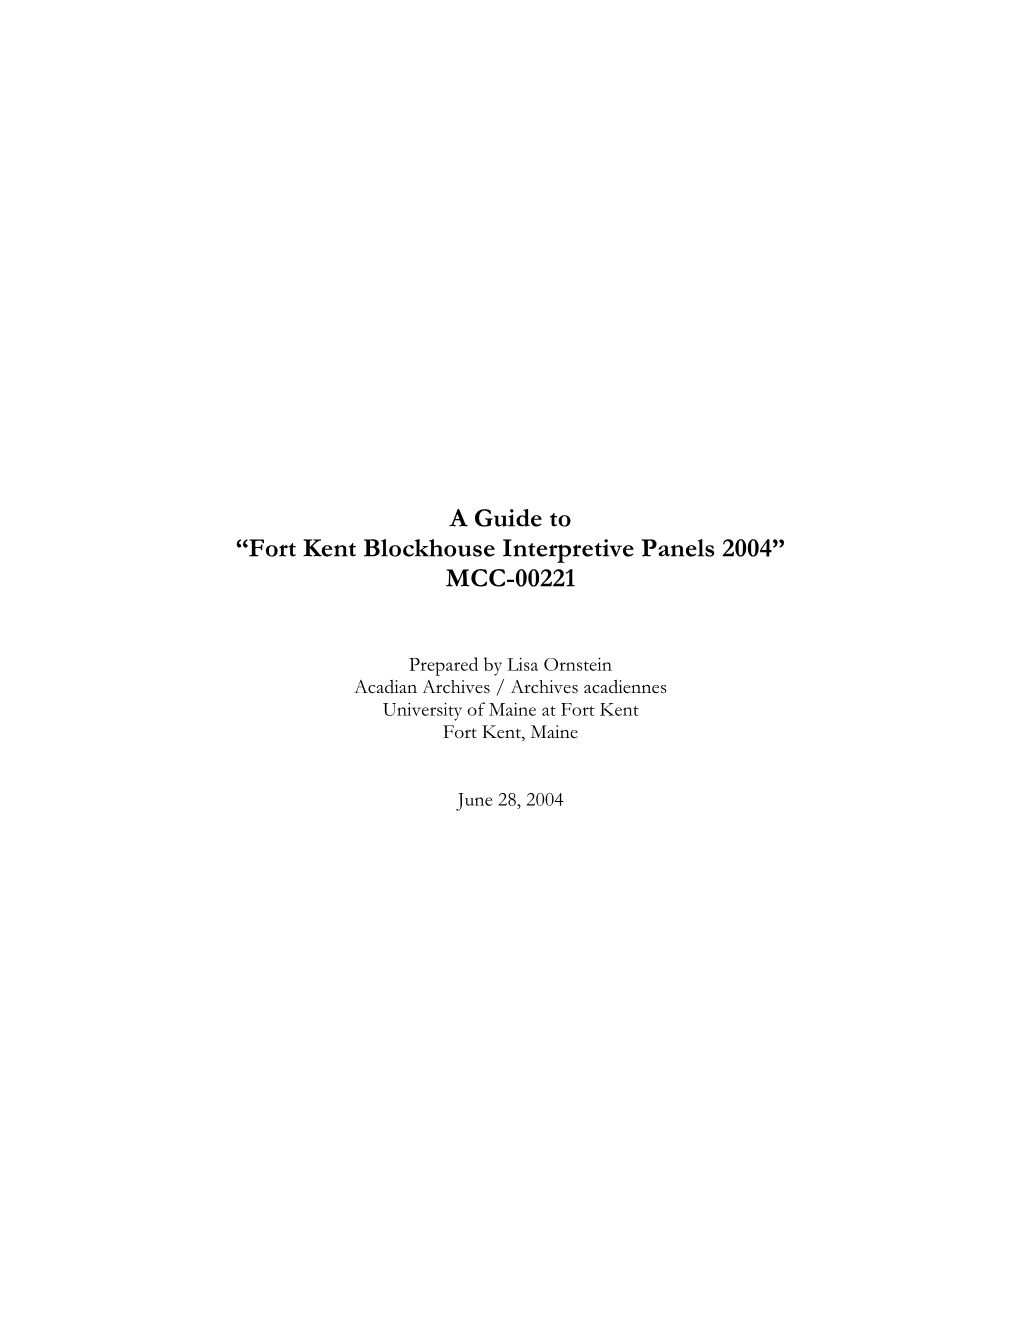 A Guide to “Fort Kent Blockhouse Interpretive Panels 2004” MCC-00221